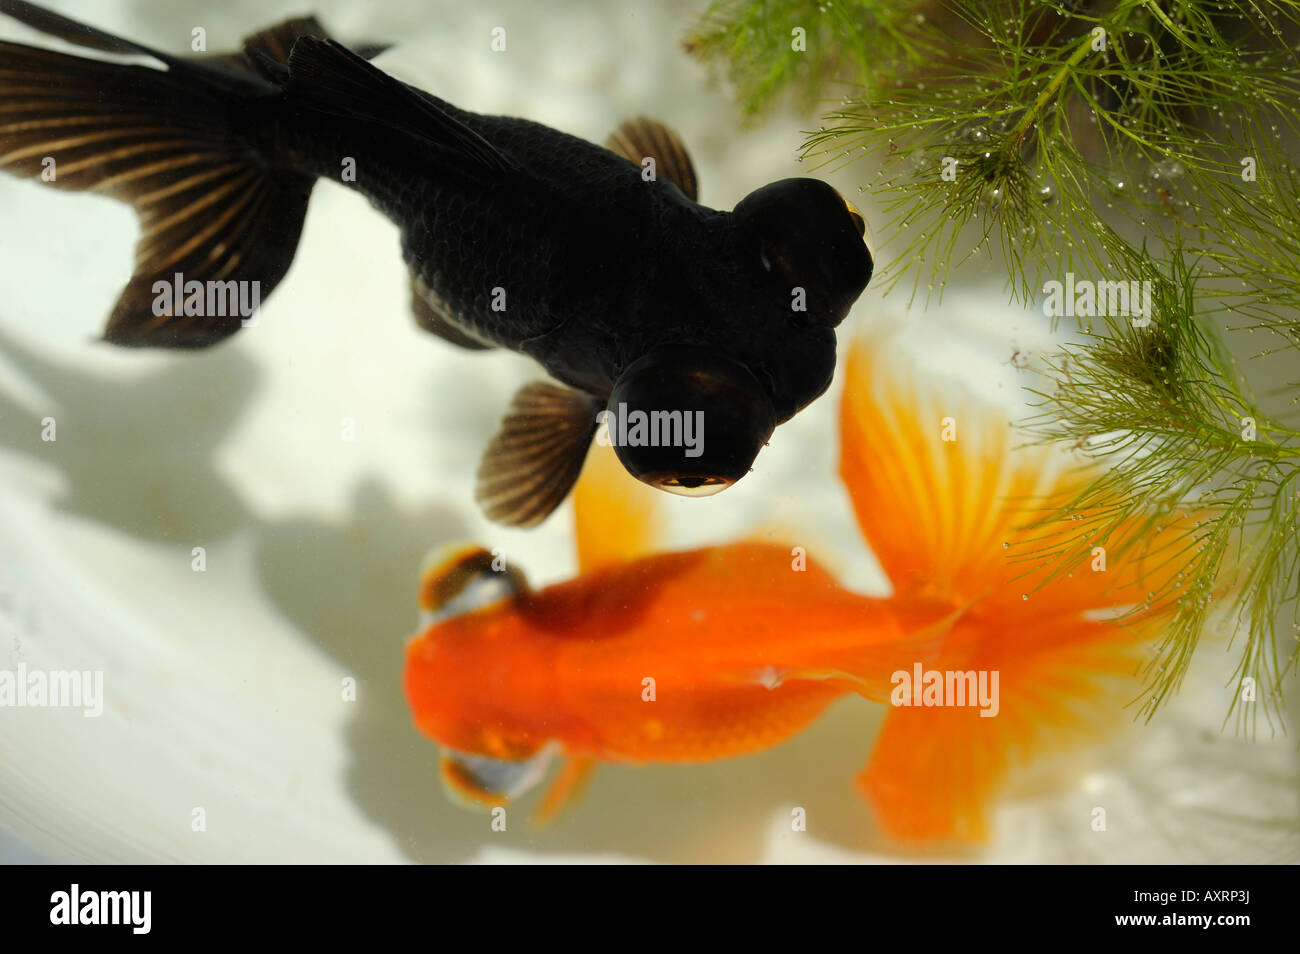 Chino peces de colores. 2008 Foto de stock